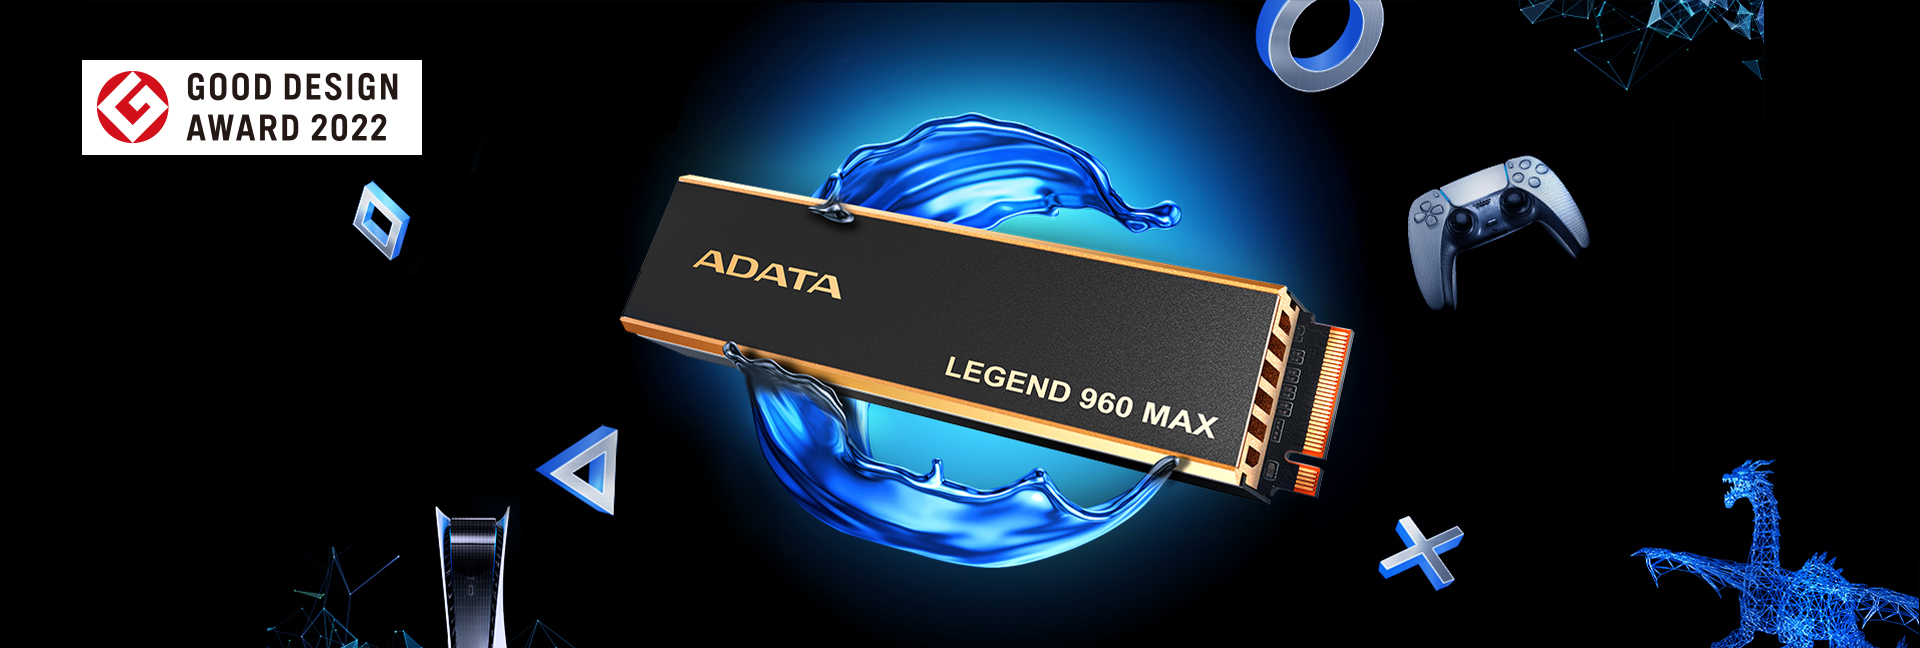 ADATA LEGEND 960 MAX PCIe Gen4 x4 M.2 2280 Solid State Drive (Global)